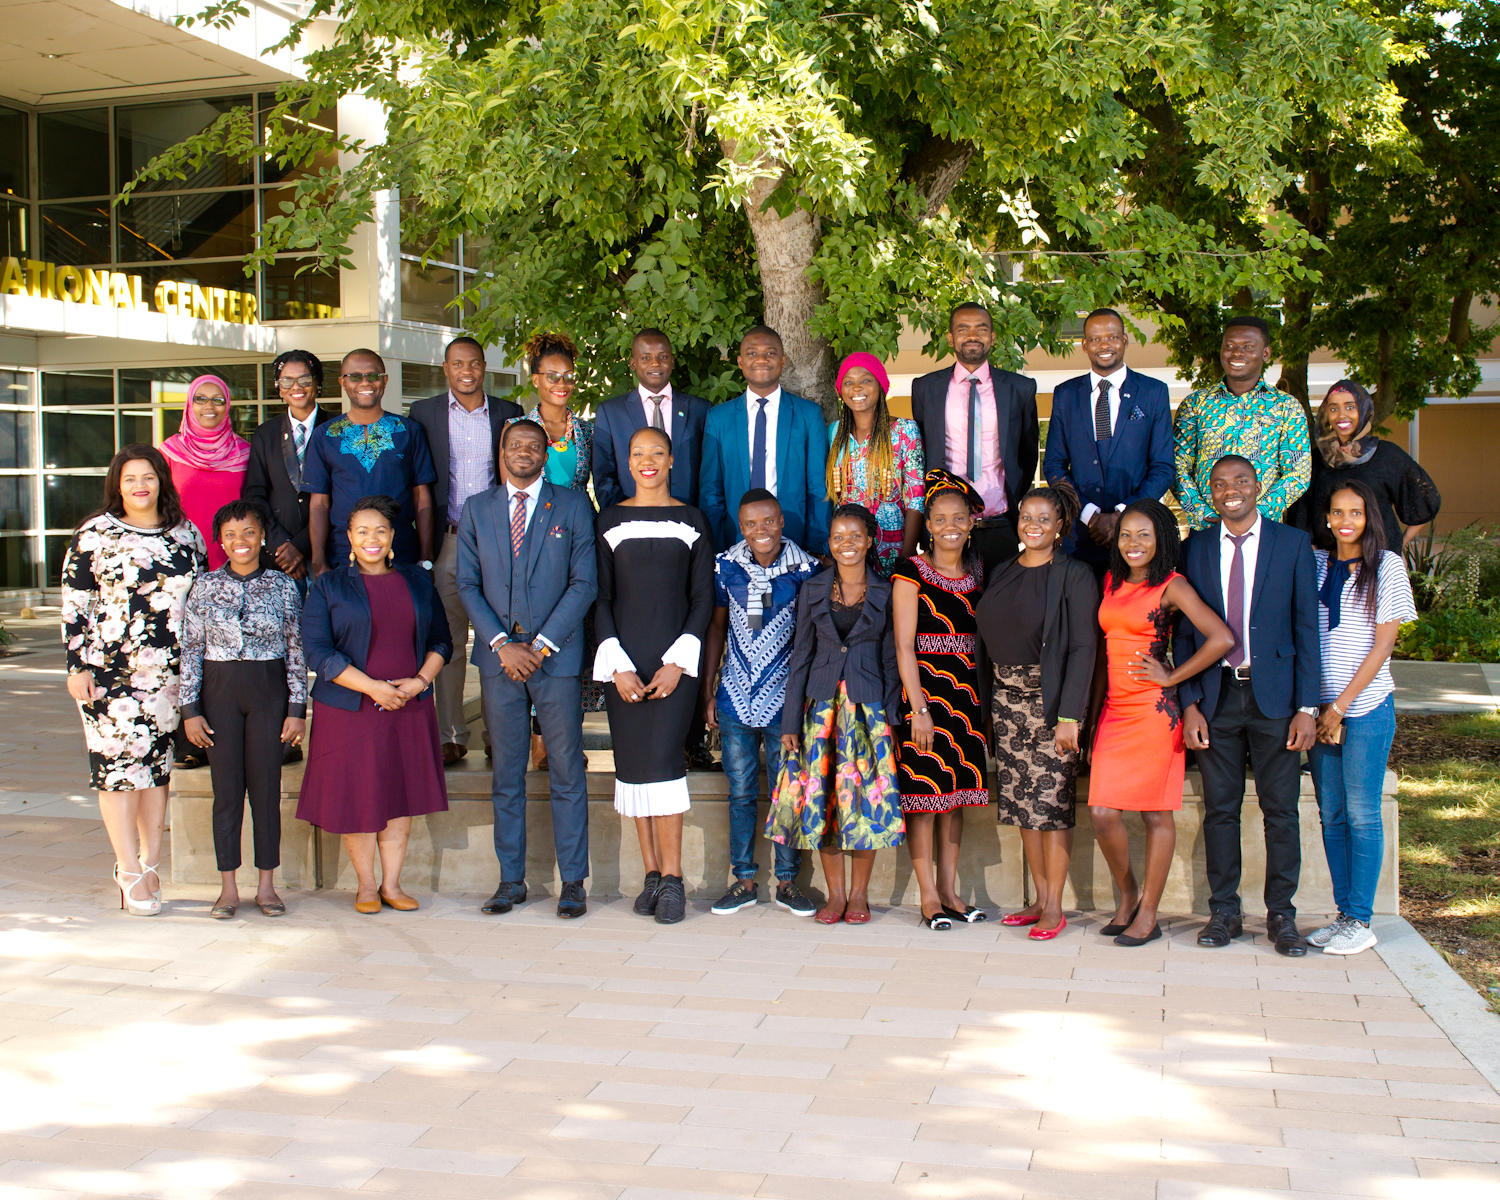 2018 Mandela Fellow Group Photo at International Center